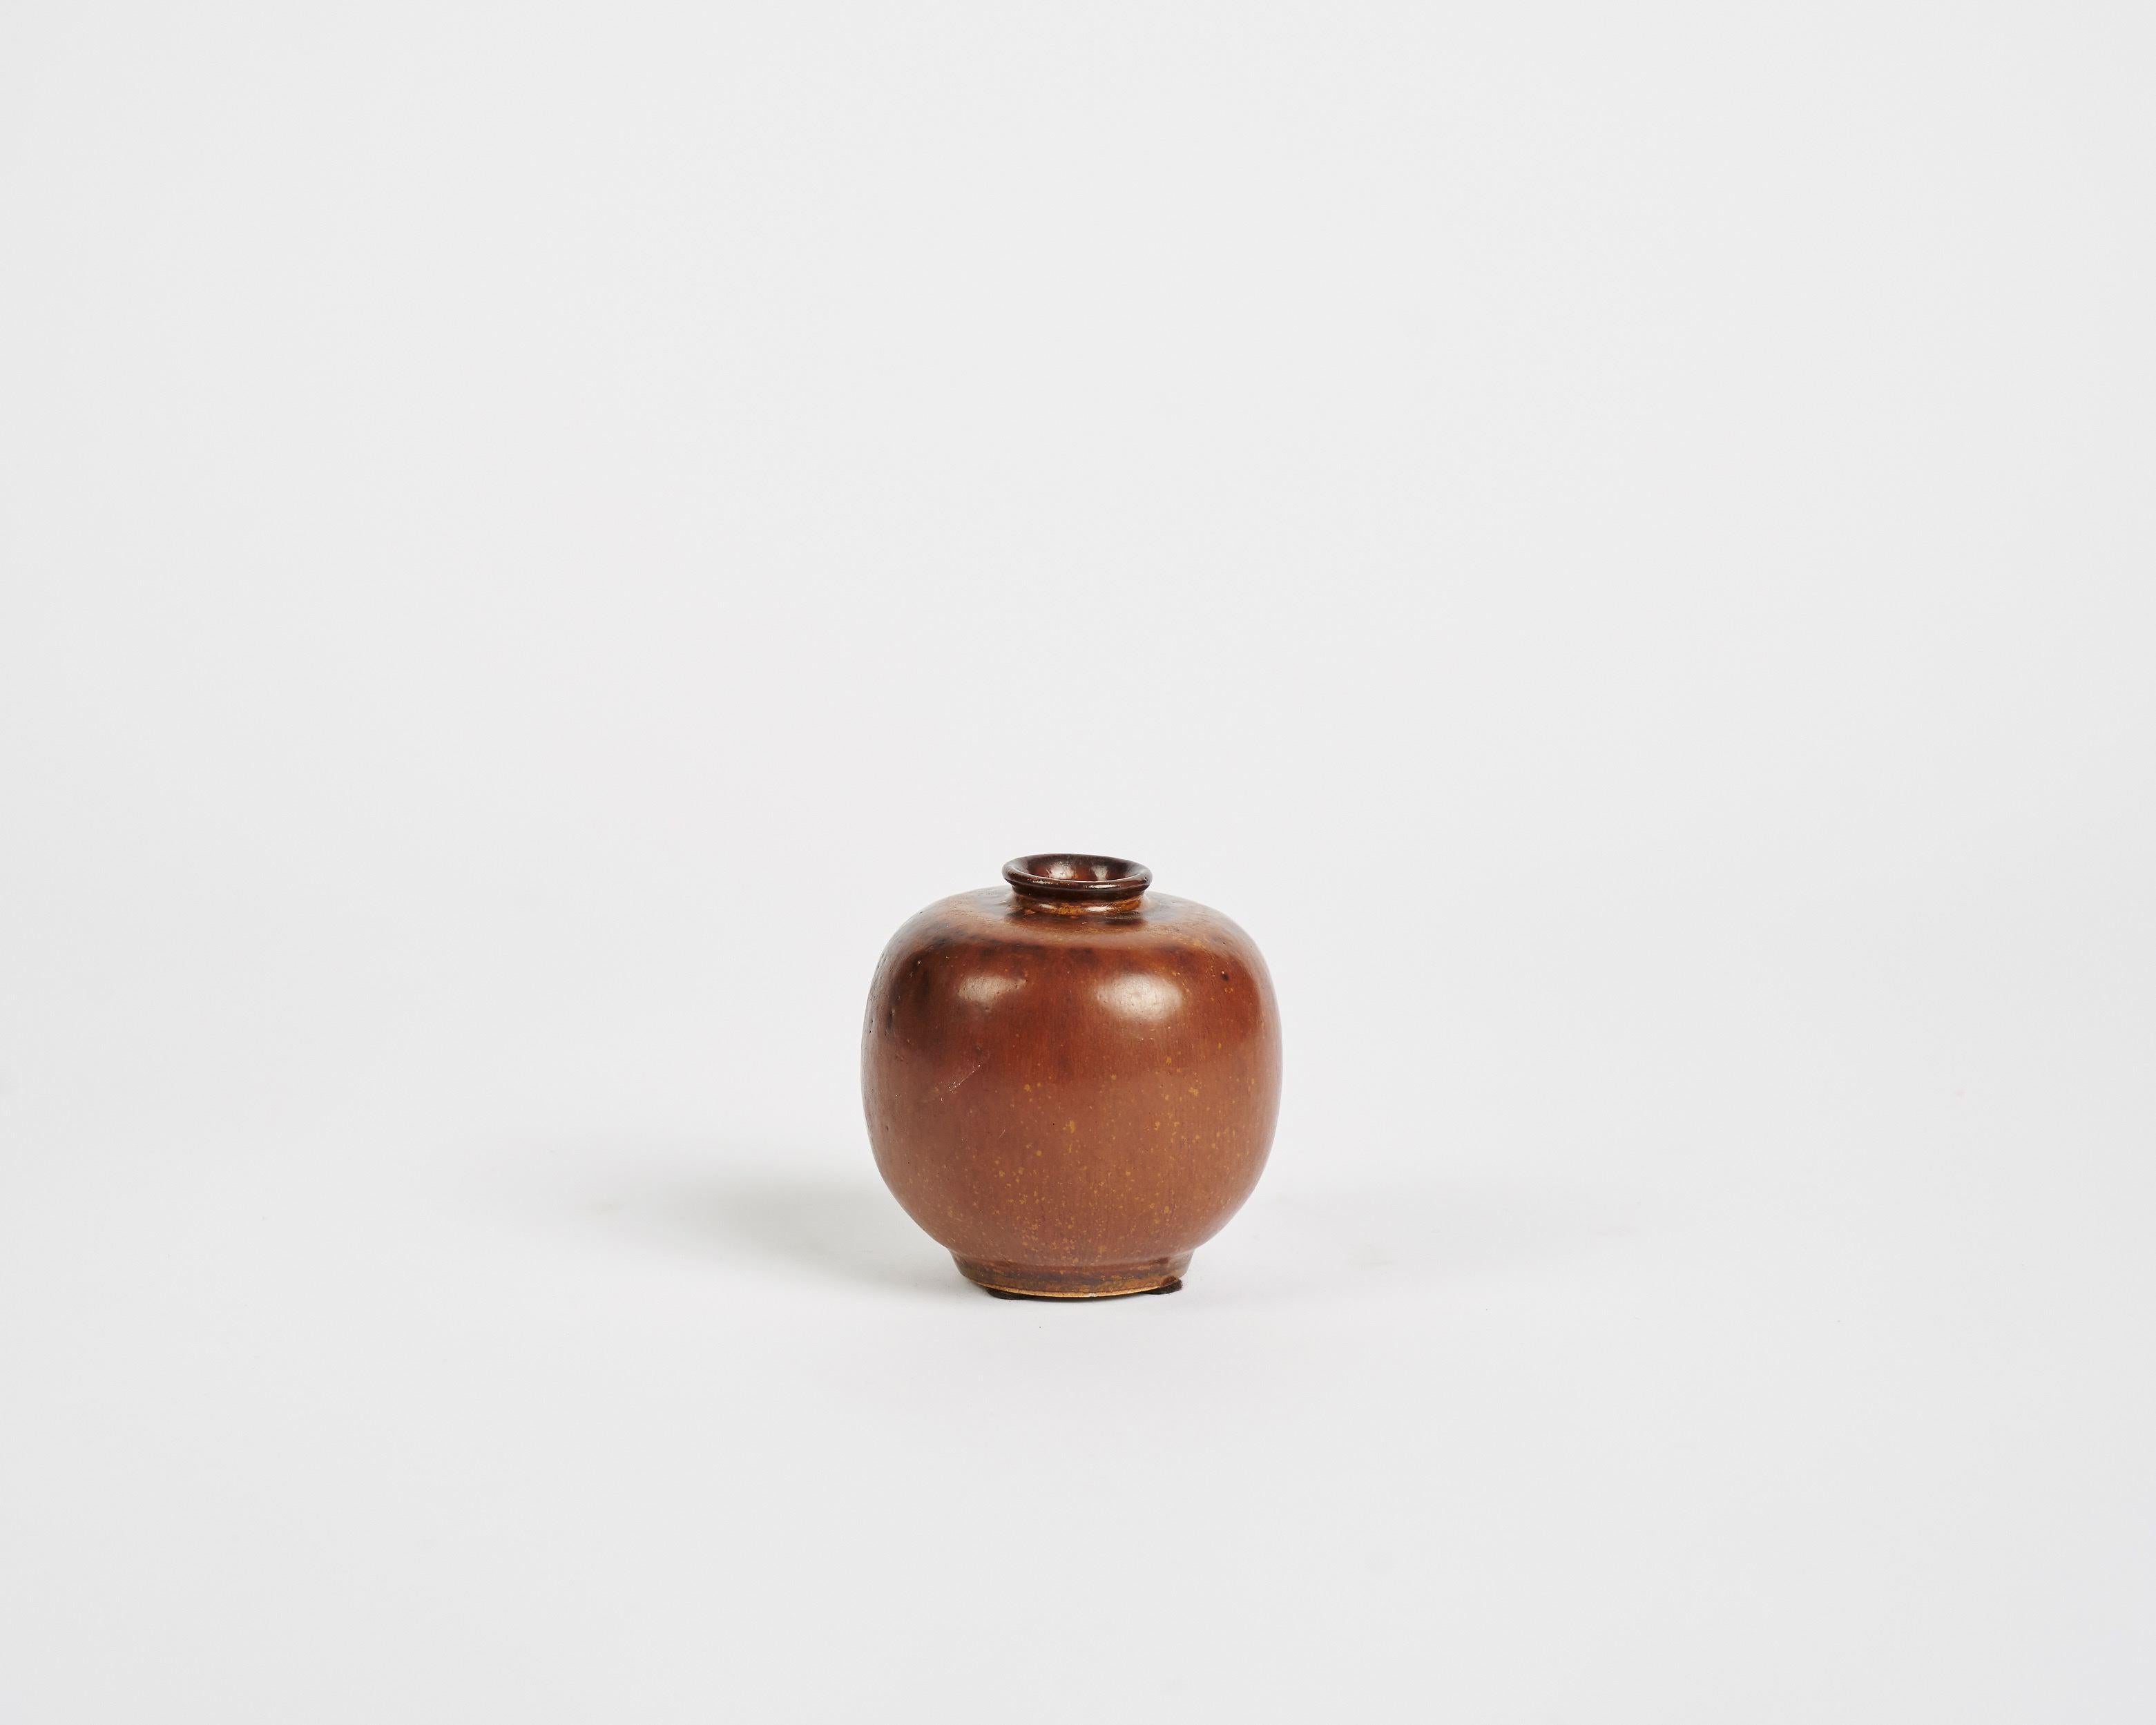 Round ceramic vase Arne Bang.

Signed: AB
Numbered: 98.